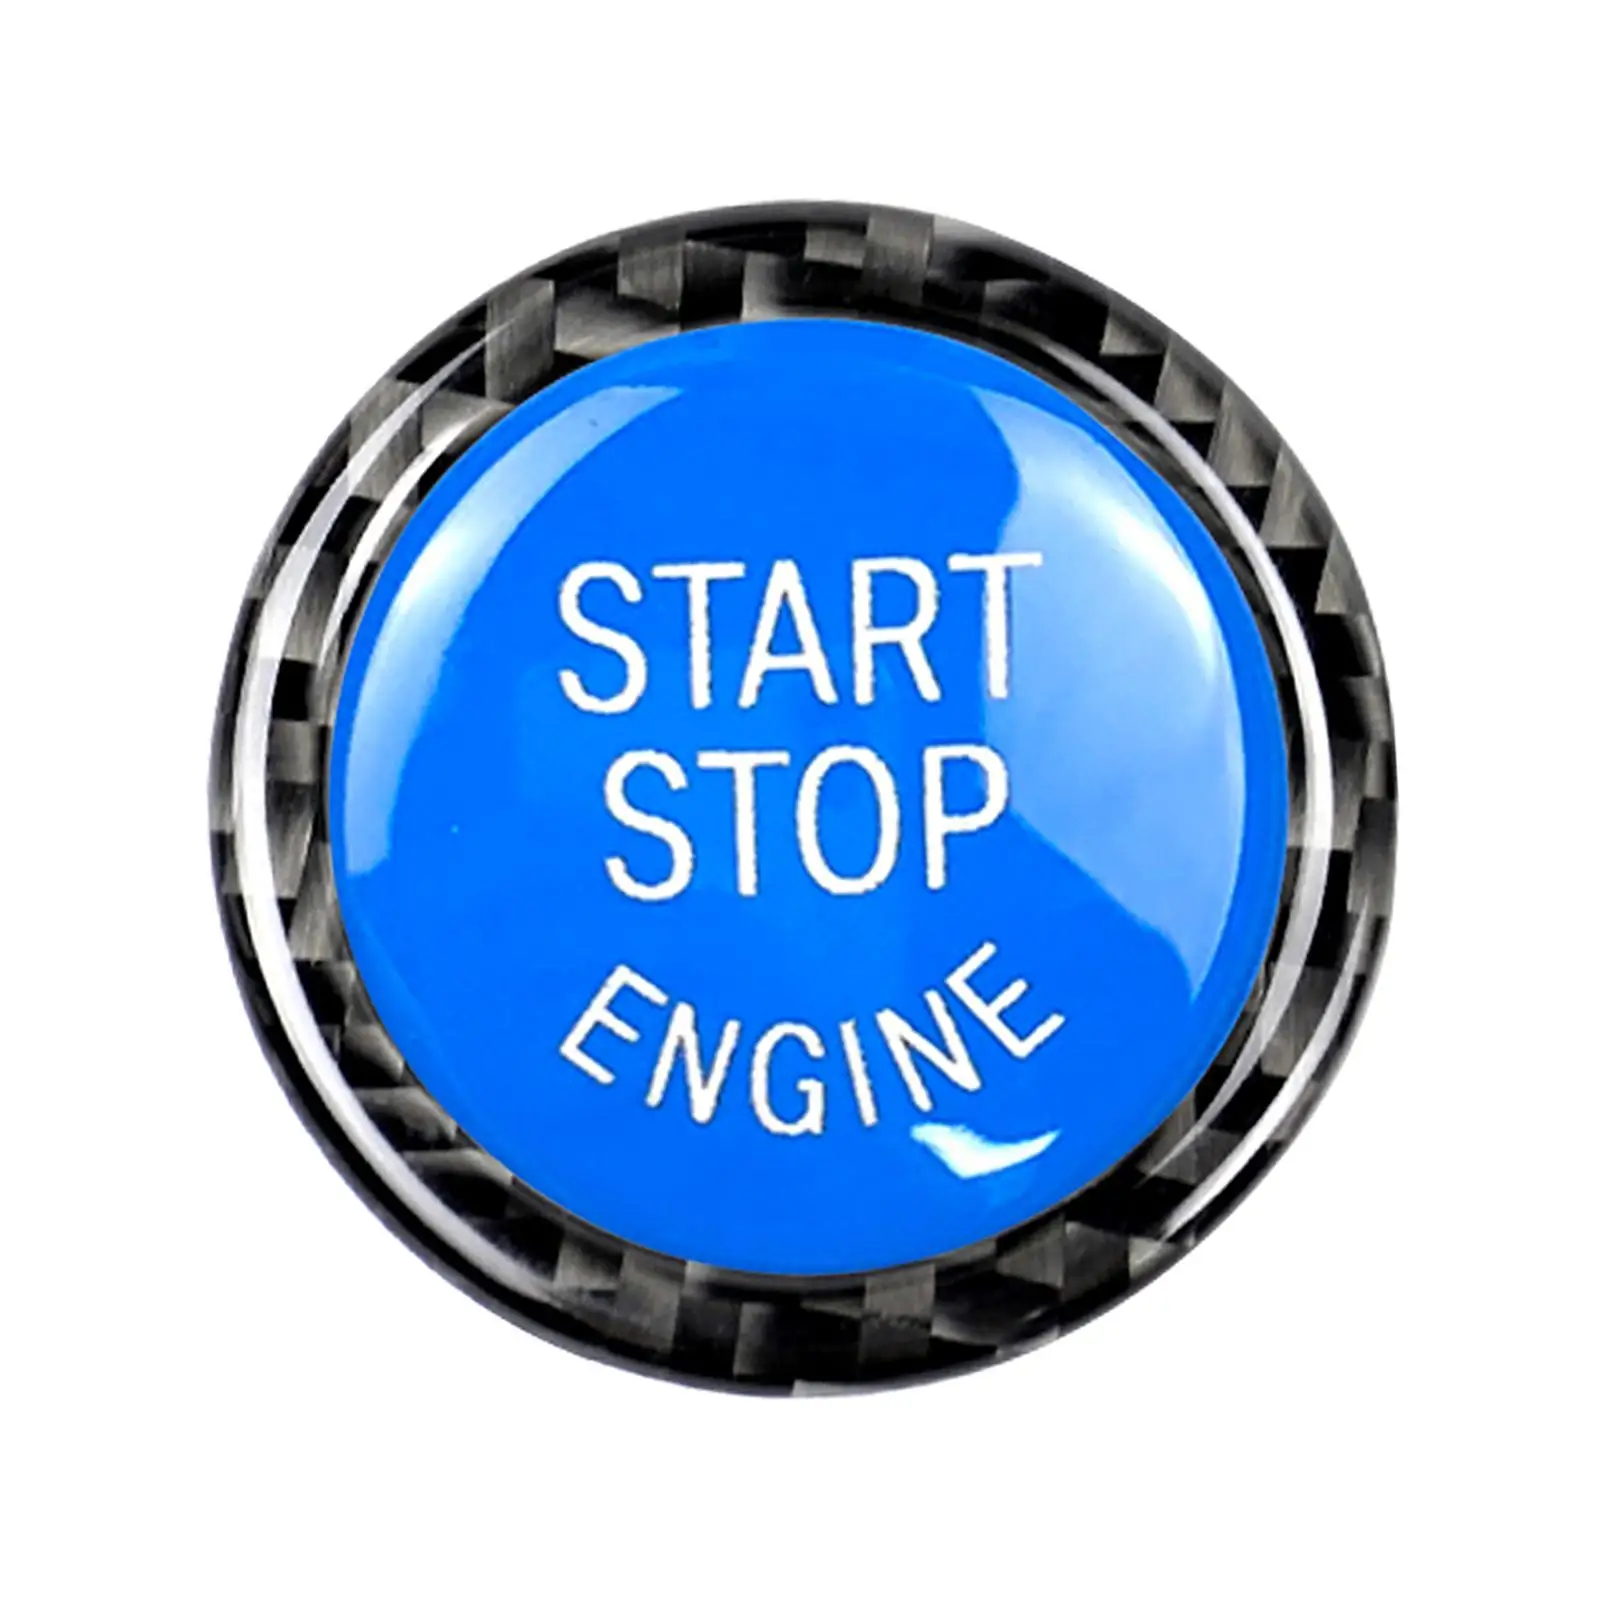 Engine Start Stop Button Trim Cover Easy Installation Replace Cover Trim Rings Fit for E90 E92 E93 320i Z4 E89 Accessories